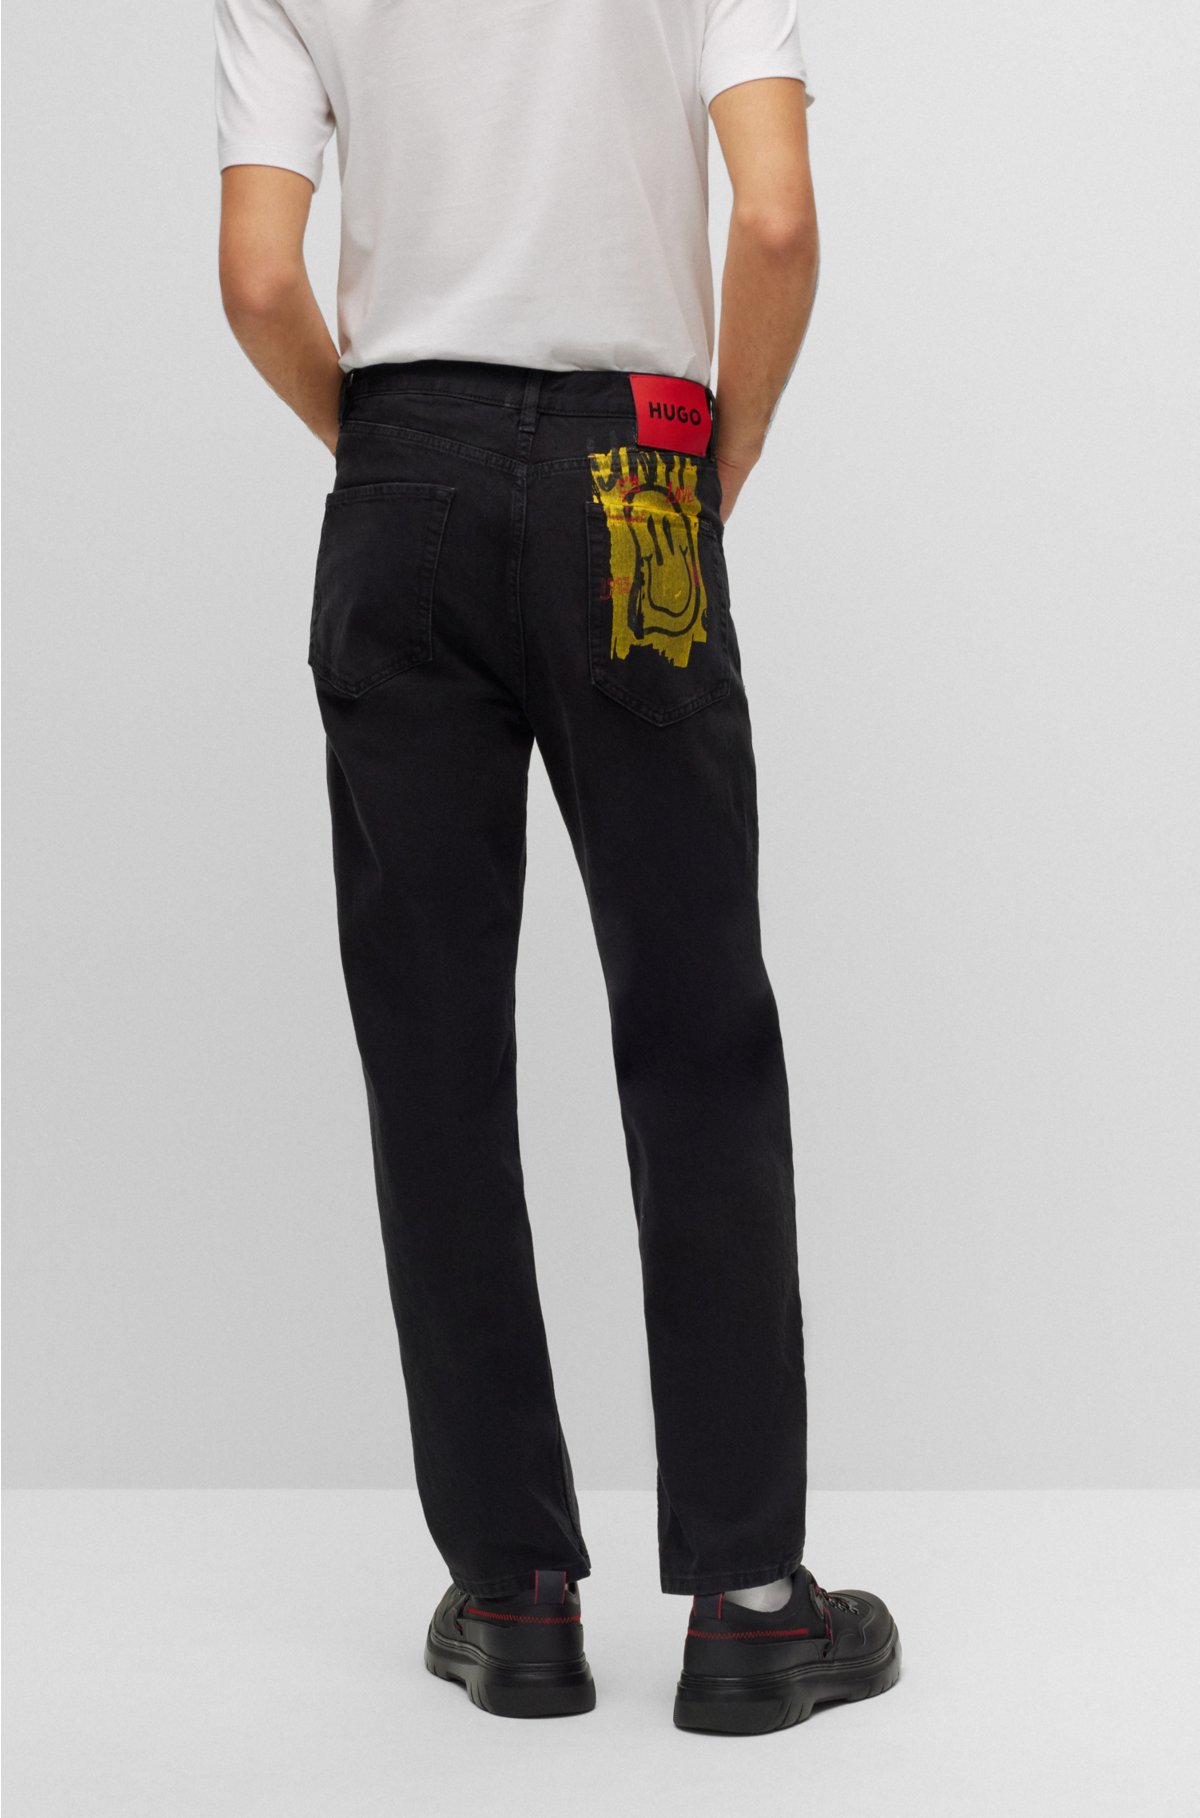 dvs. Jurassic Park Outlaw HUGO - Regular-fit jeans in black rigid denim